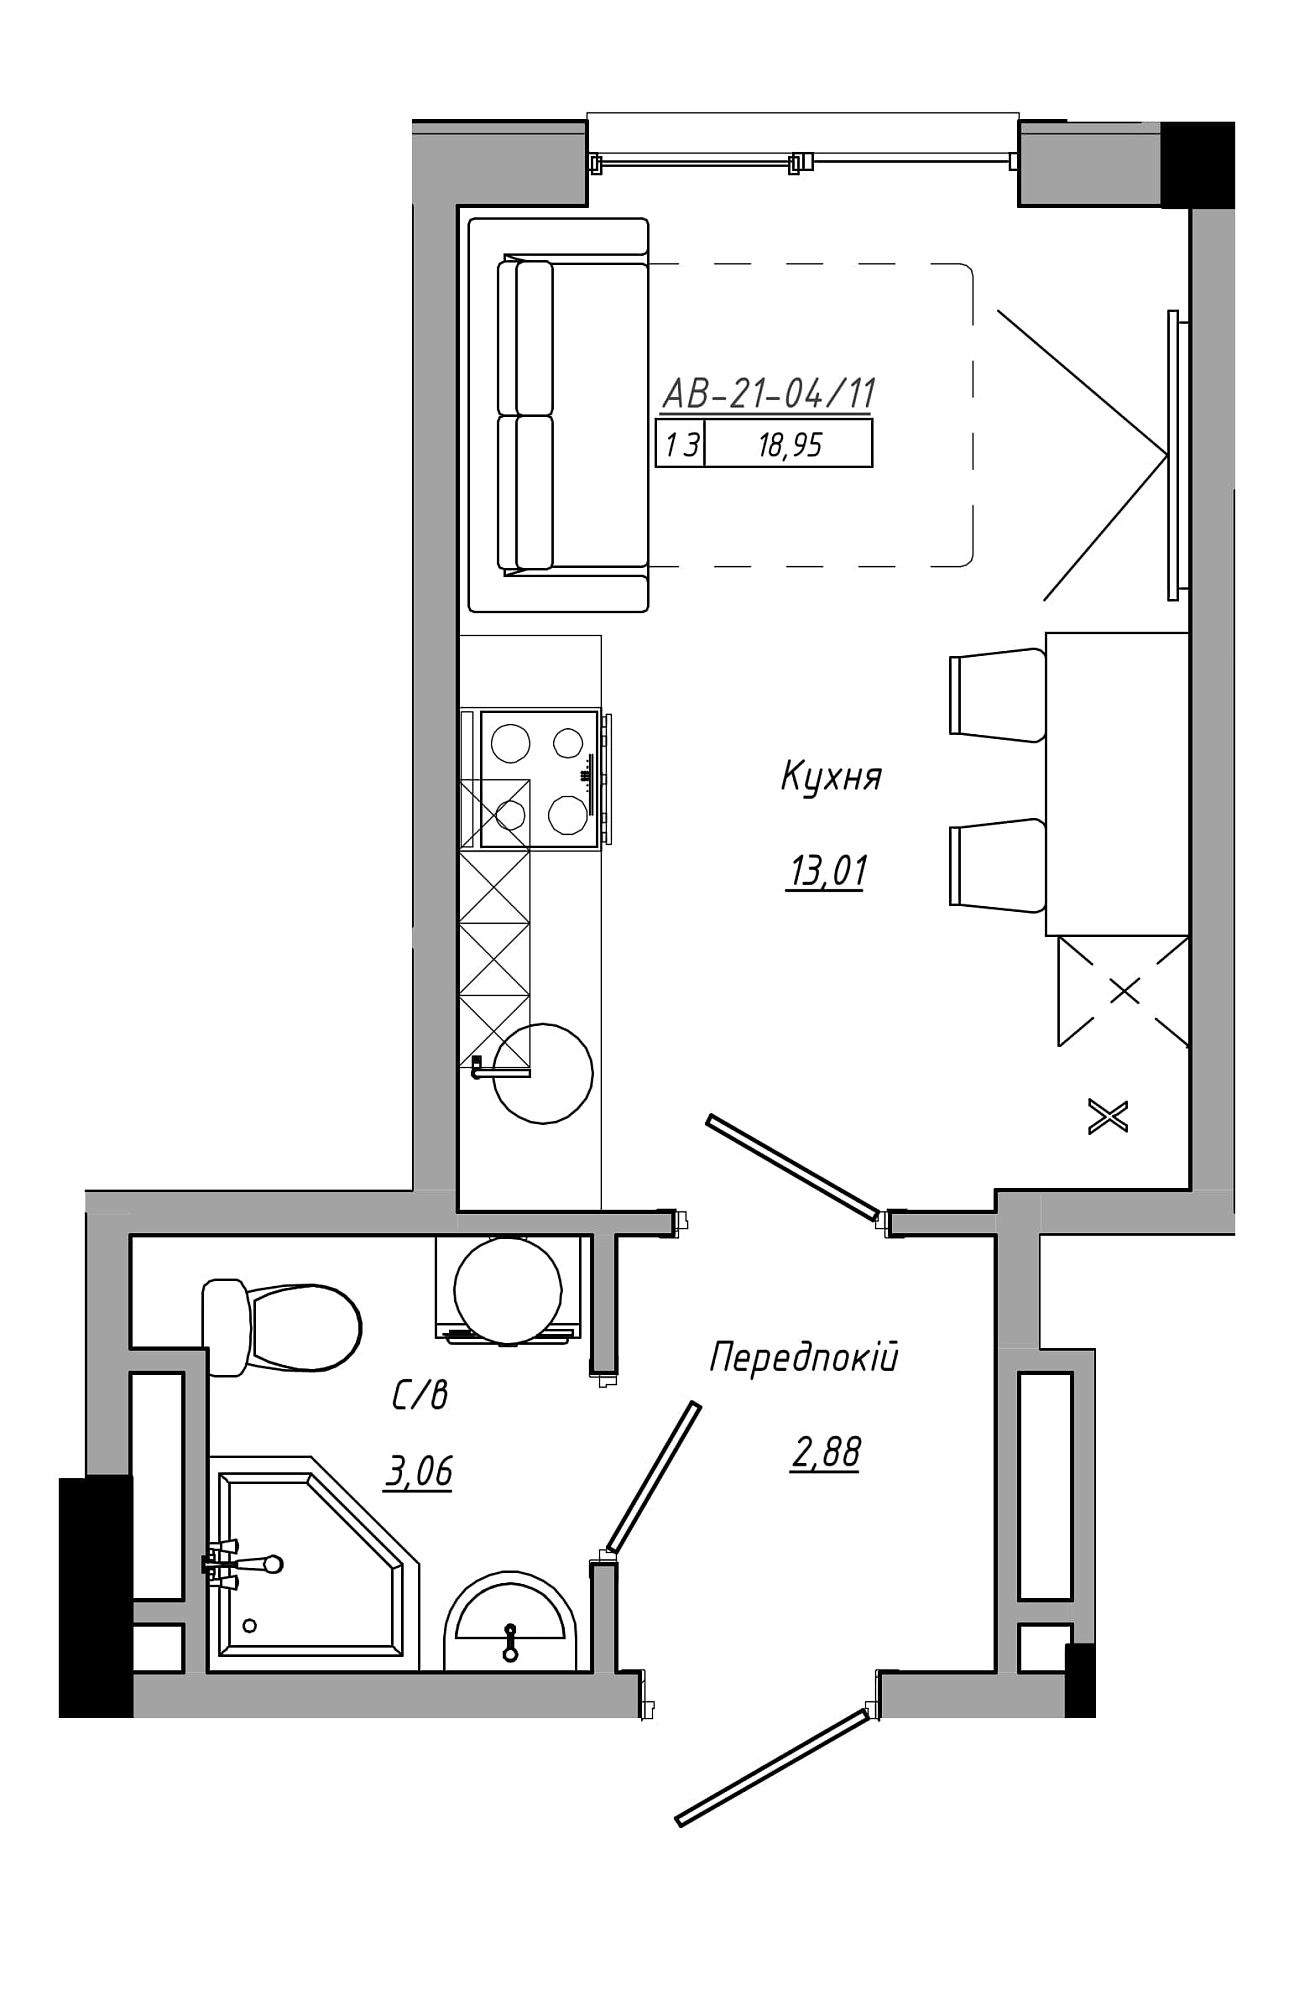 Planning Smart flats area 18.95m2, AB-21-04/00011.